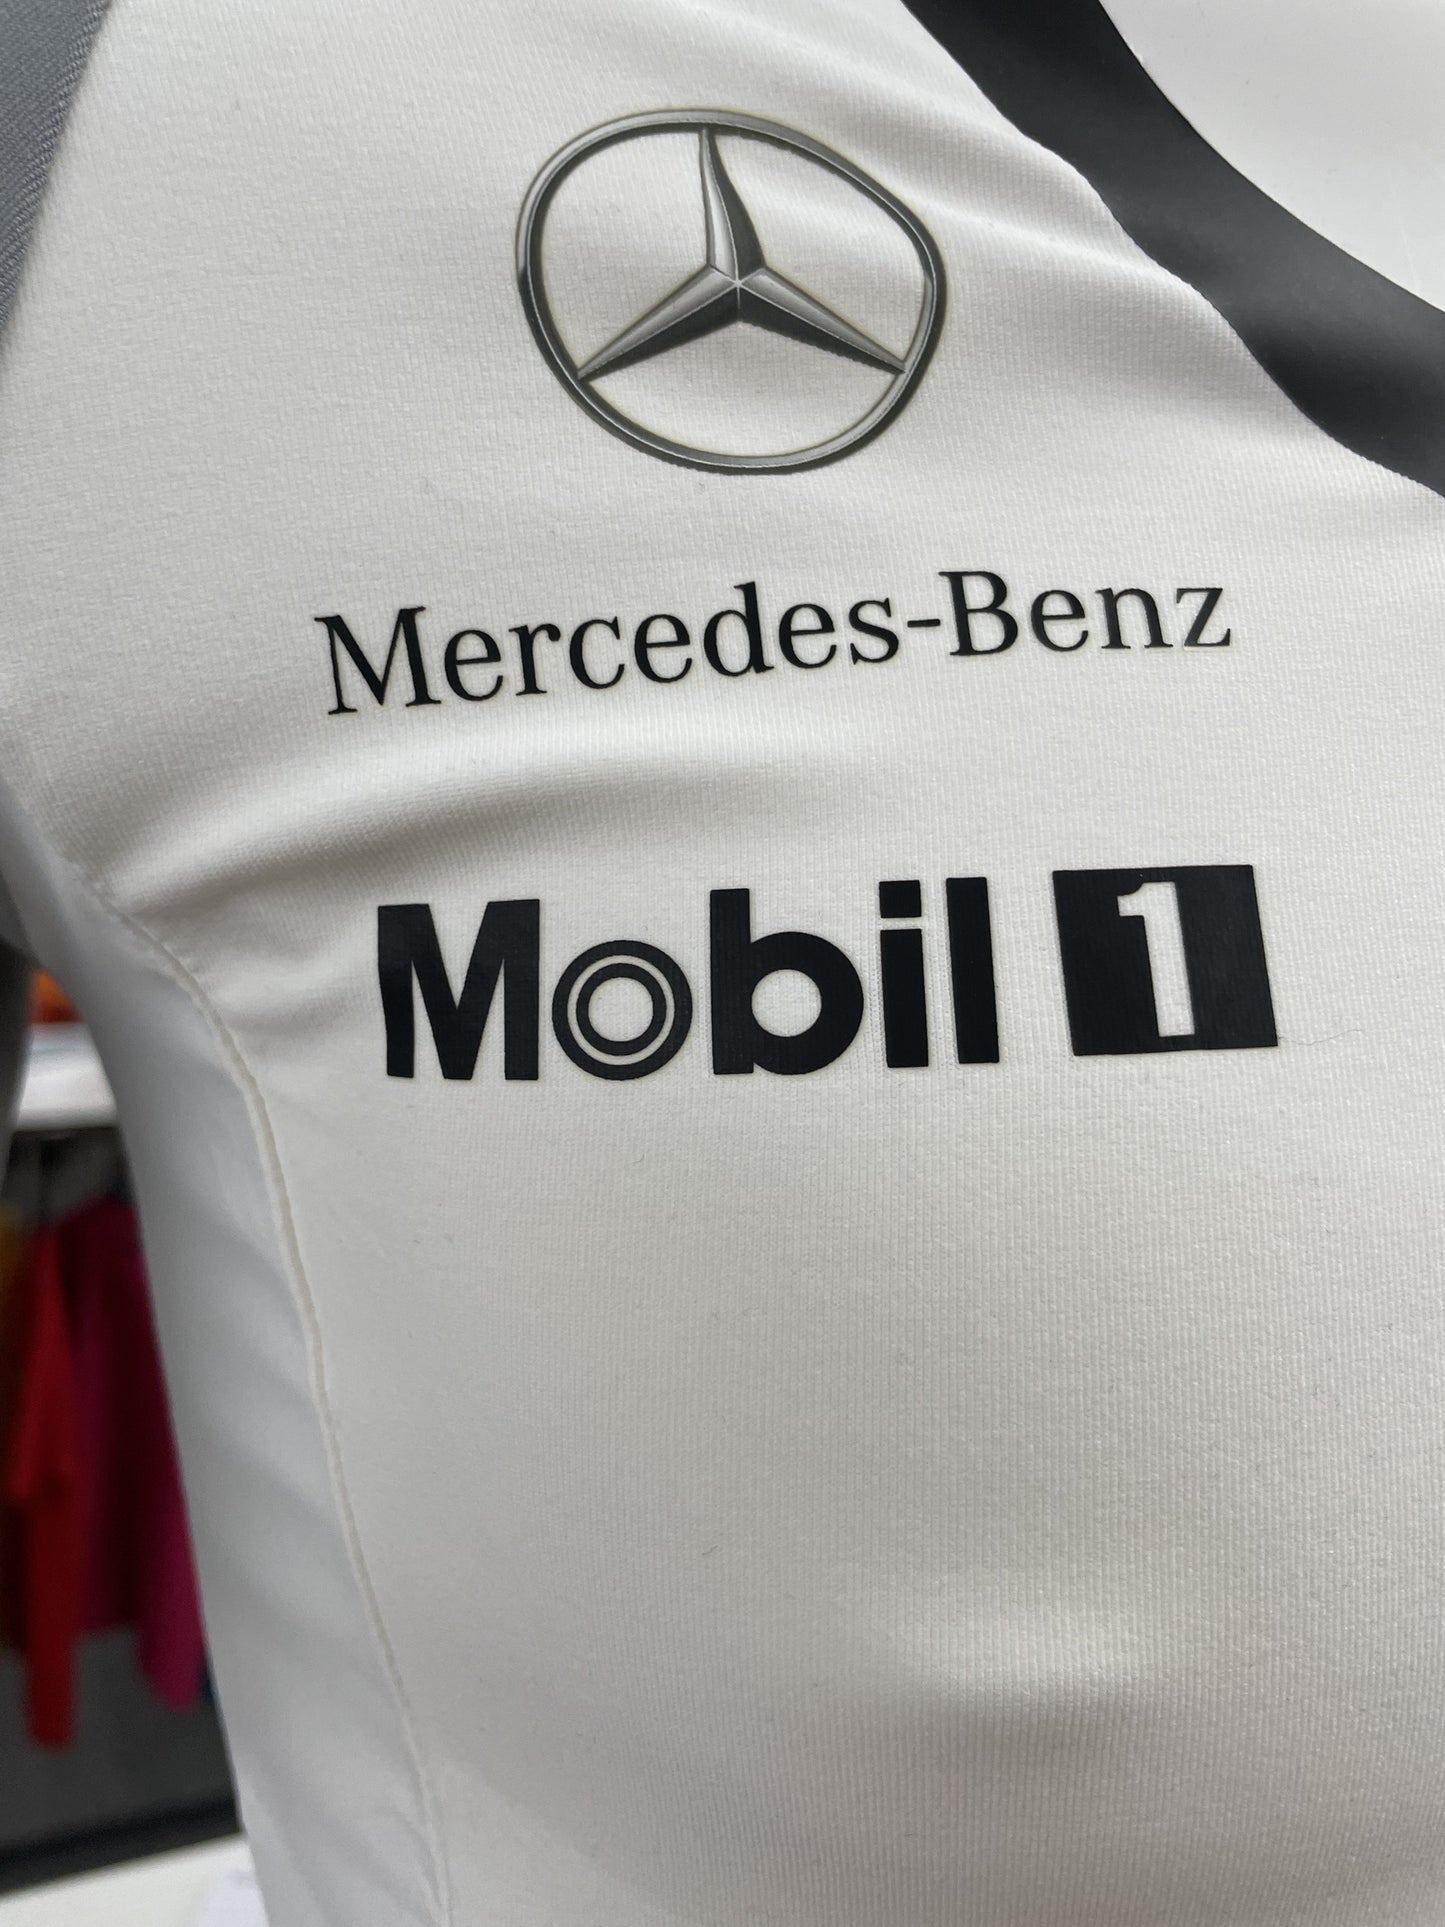 Damen Premium Fan T-Shirt mit Mercedes Benz, McLaren, Mobil Oil